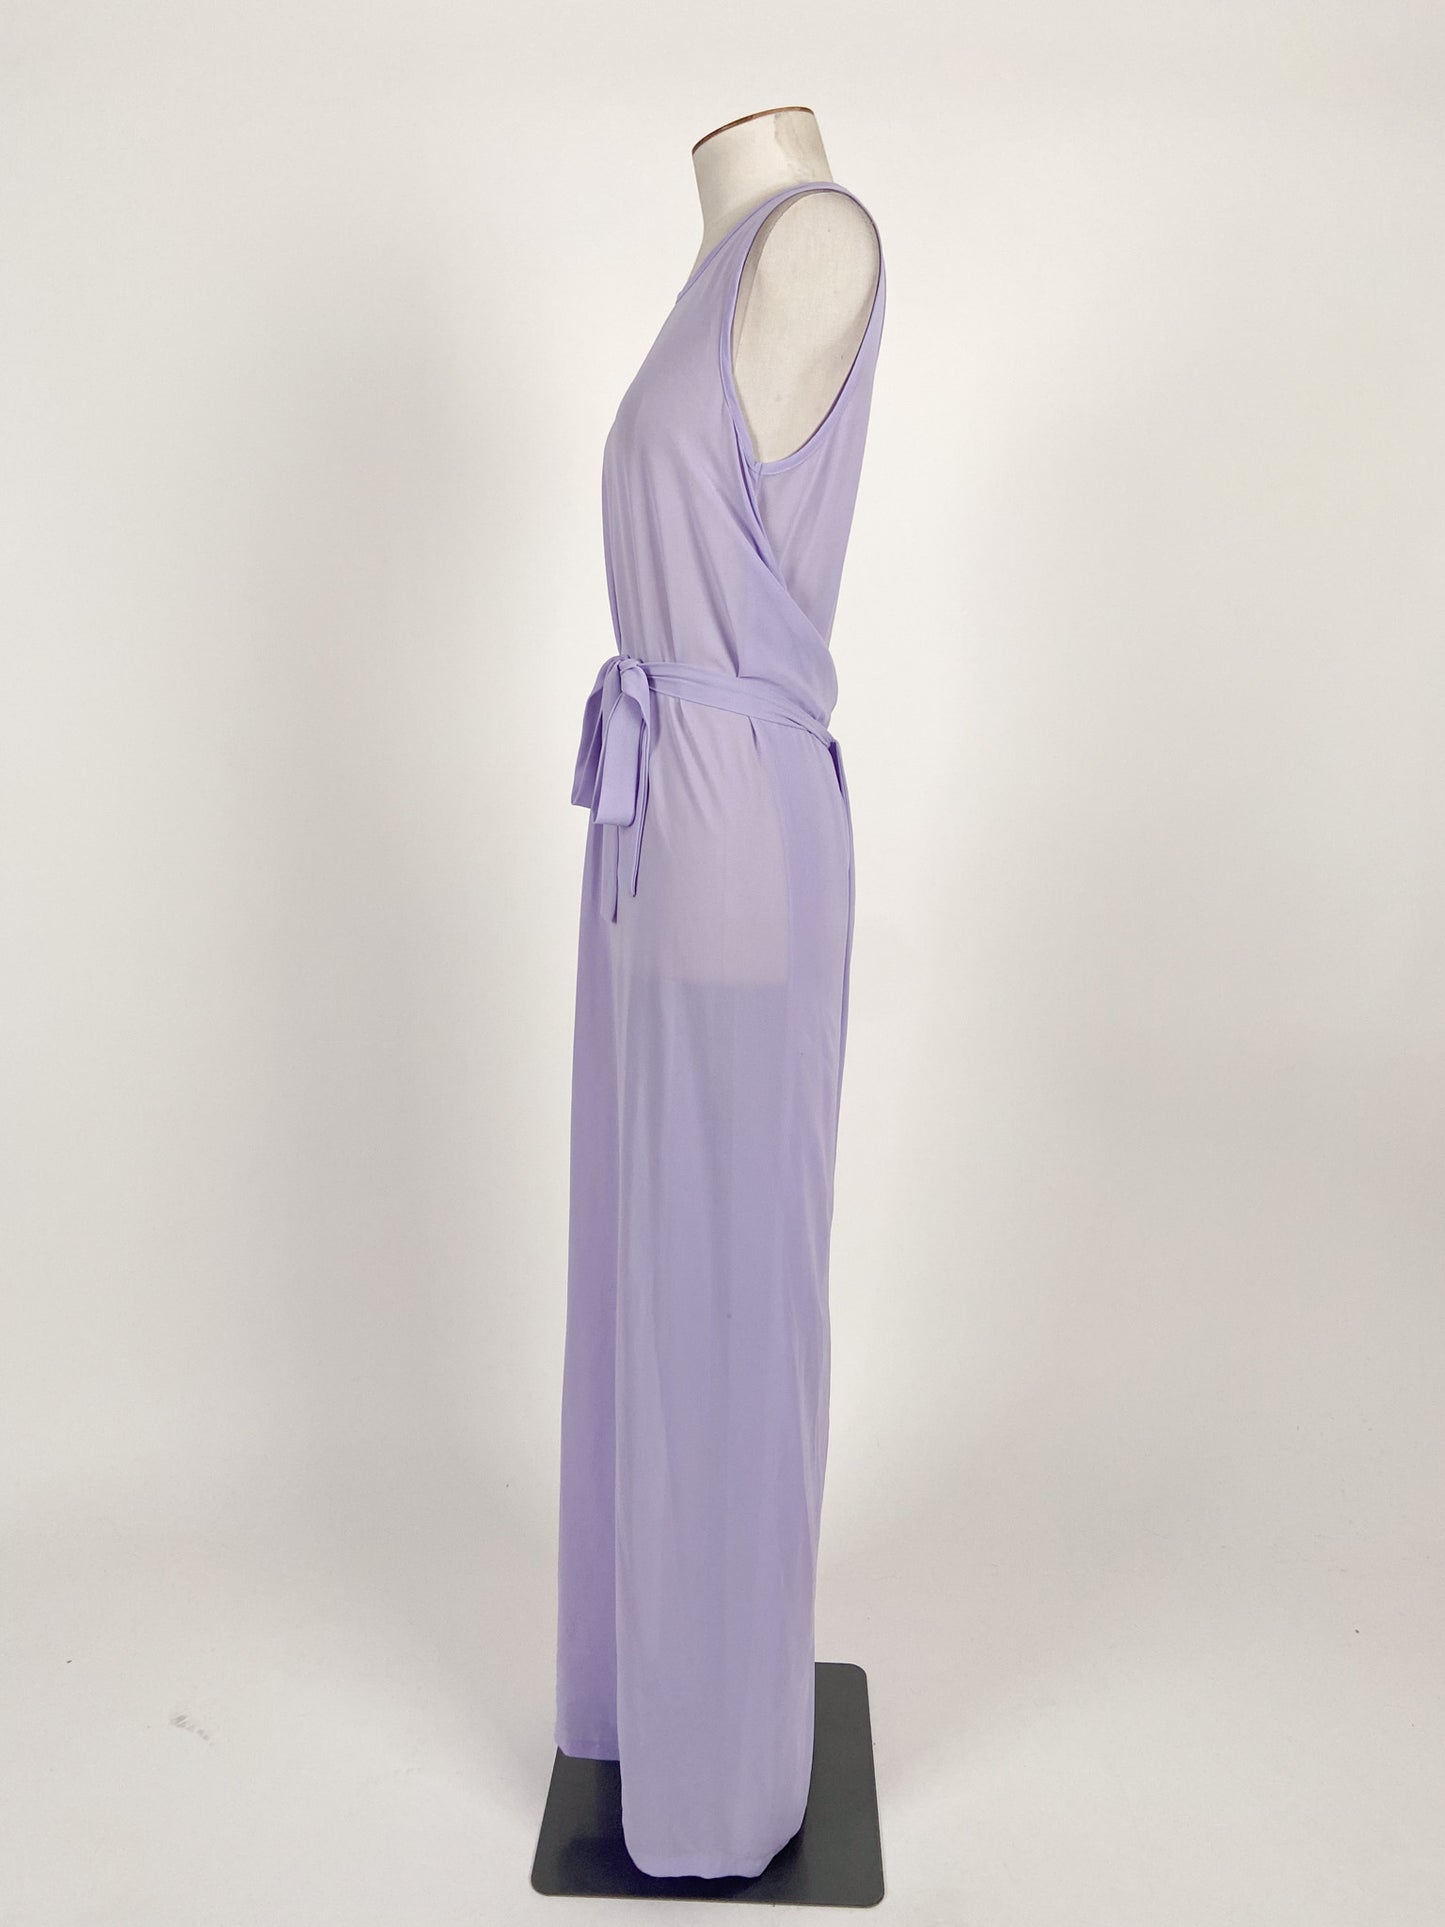 KILT | Purple Formal Dress | Size S/M